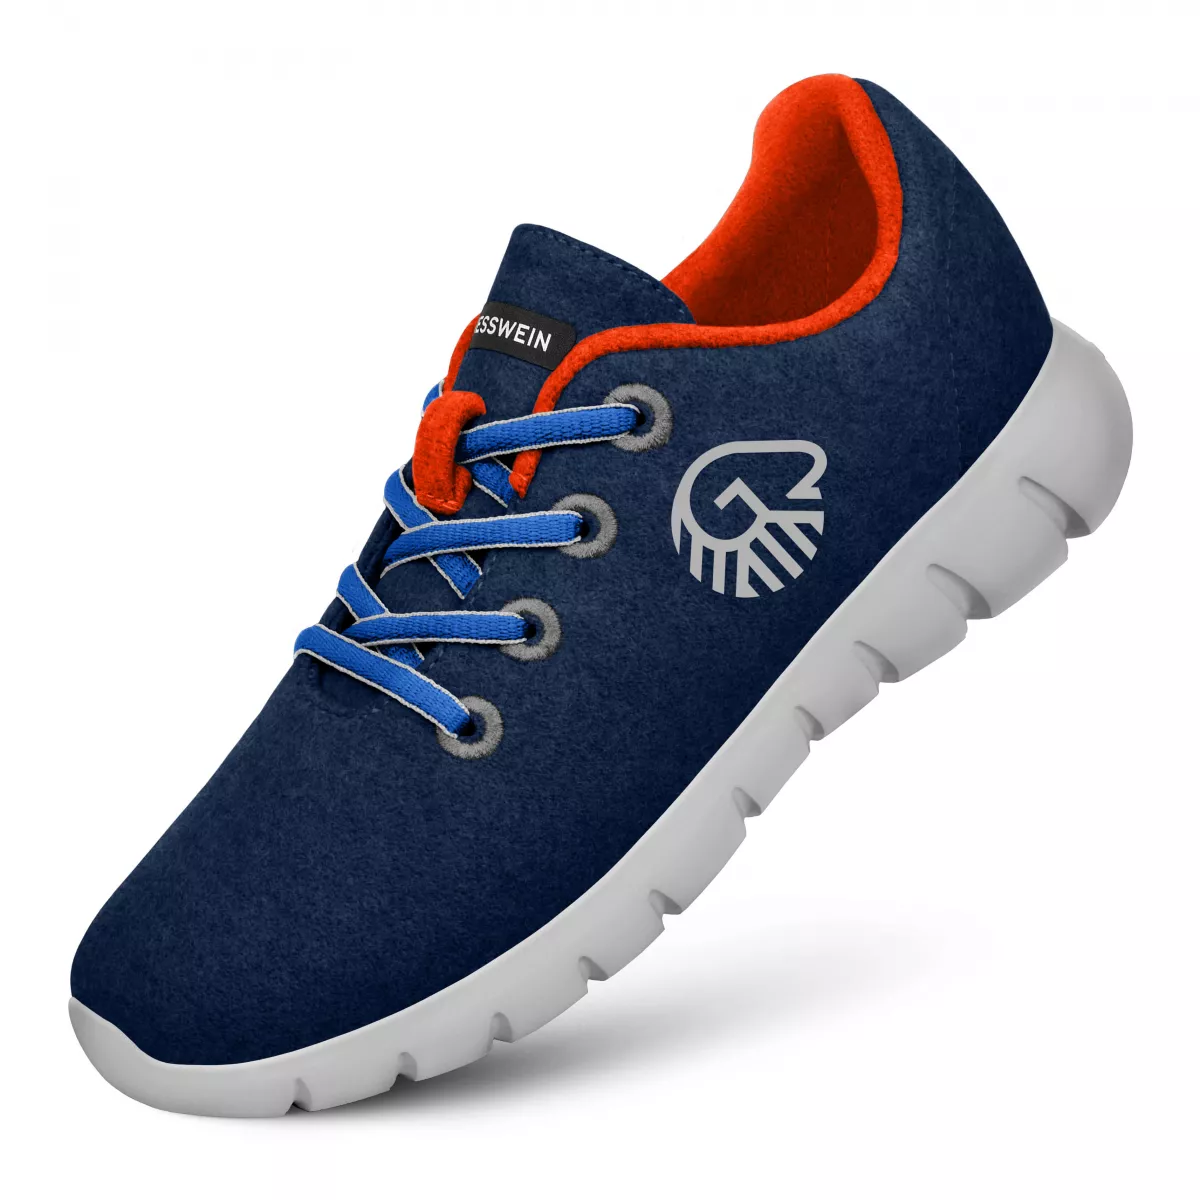 Pantofi barbati Merino Runners bleumarin 640 43